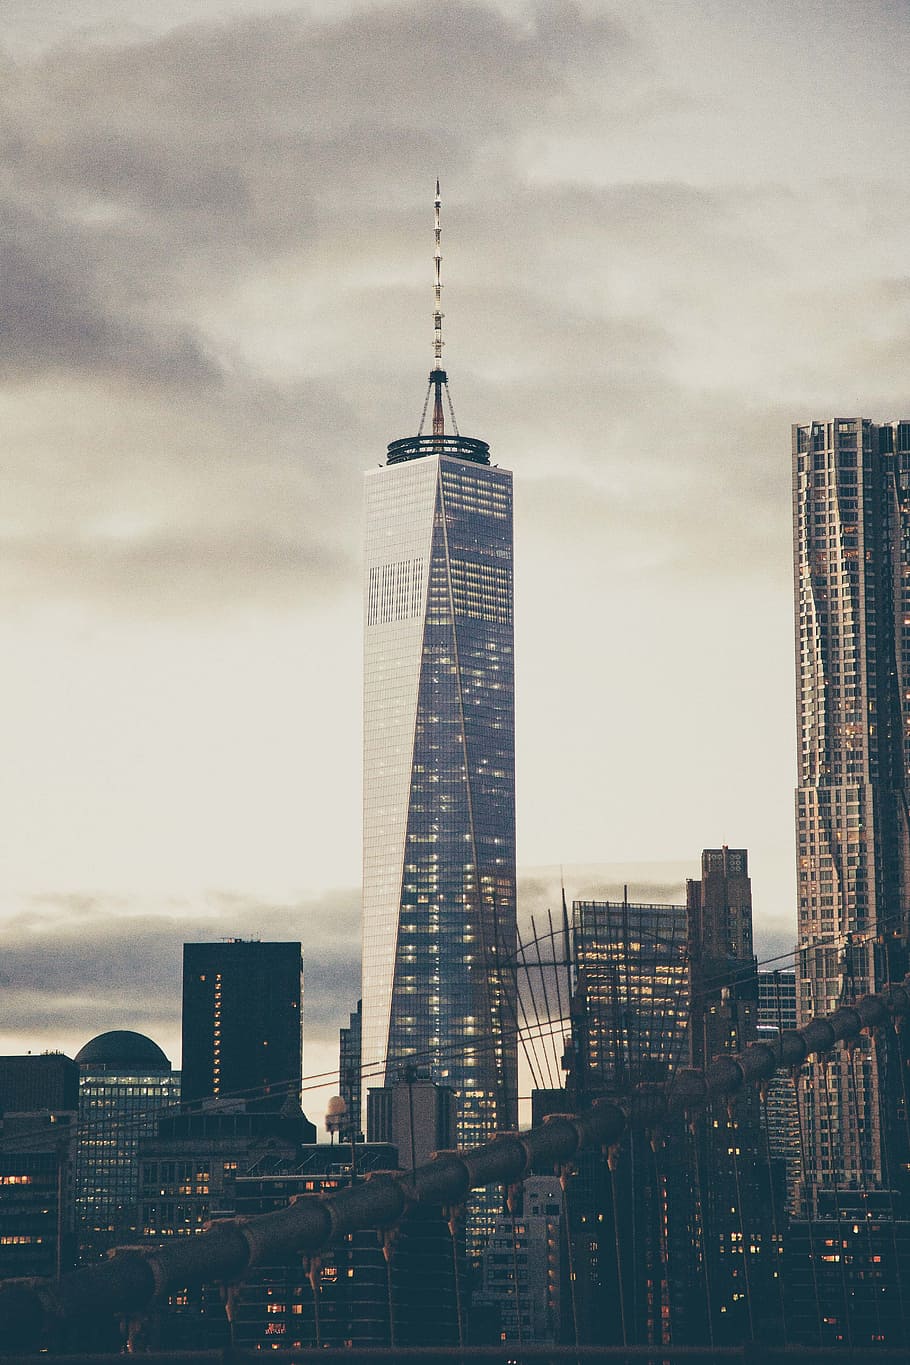 Uno, World Trade Center, One World Trade Center, 1wtc, Nueva York, edificio, arquitectura, rascacielos, construcción, negocios